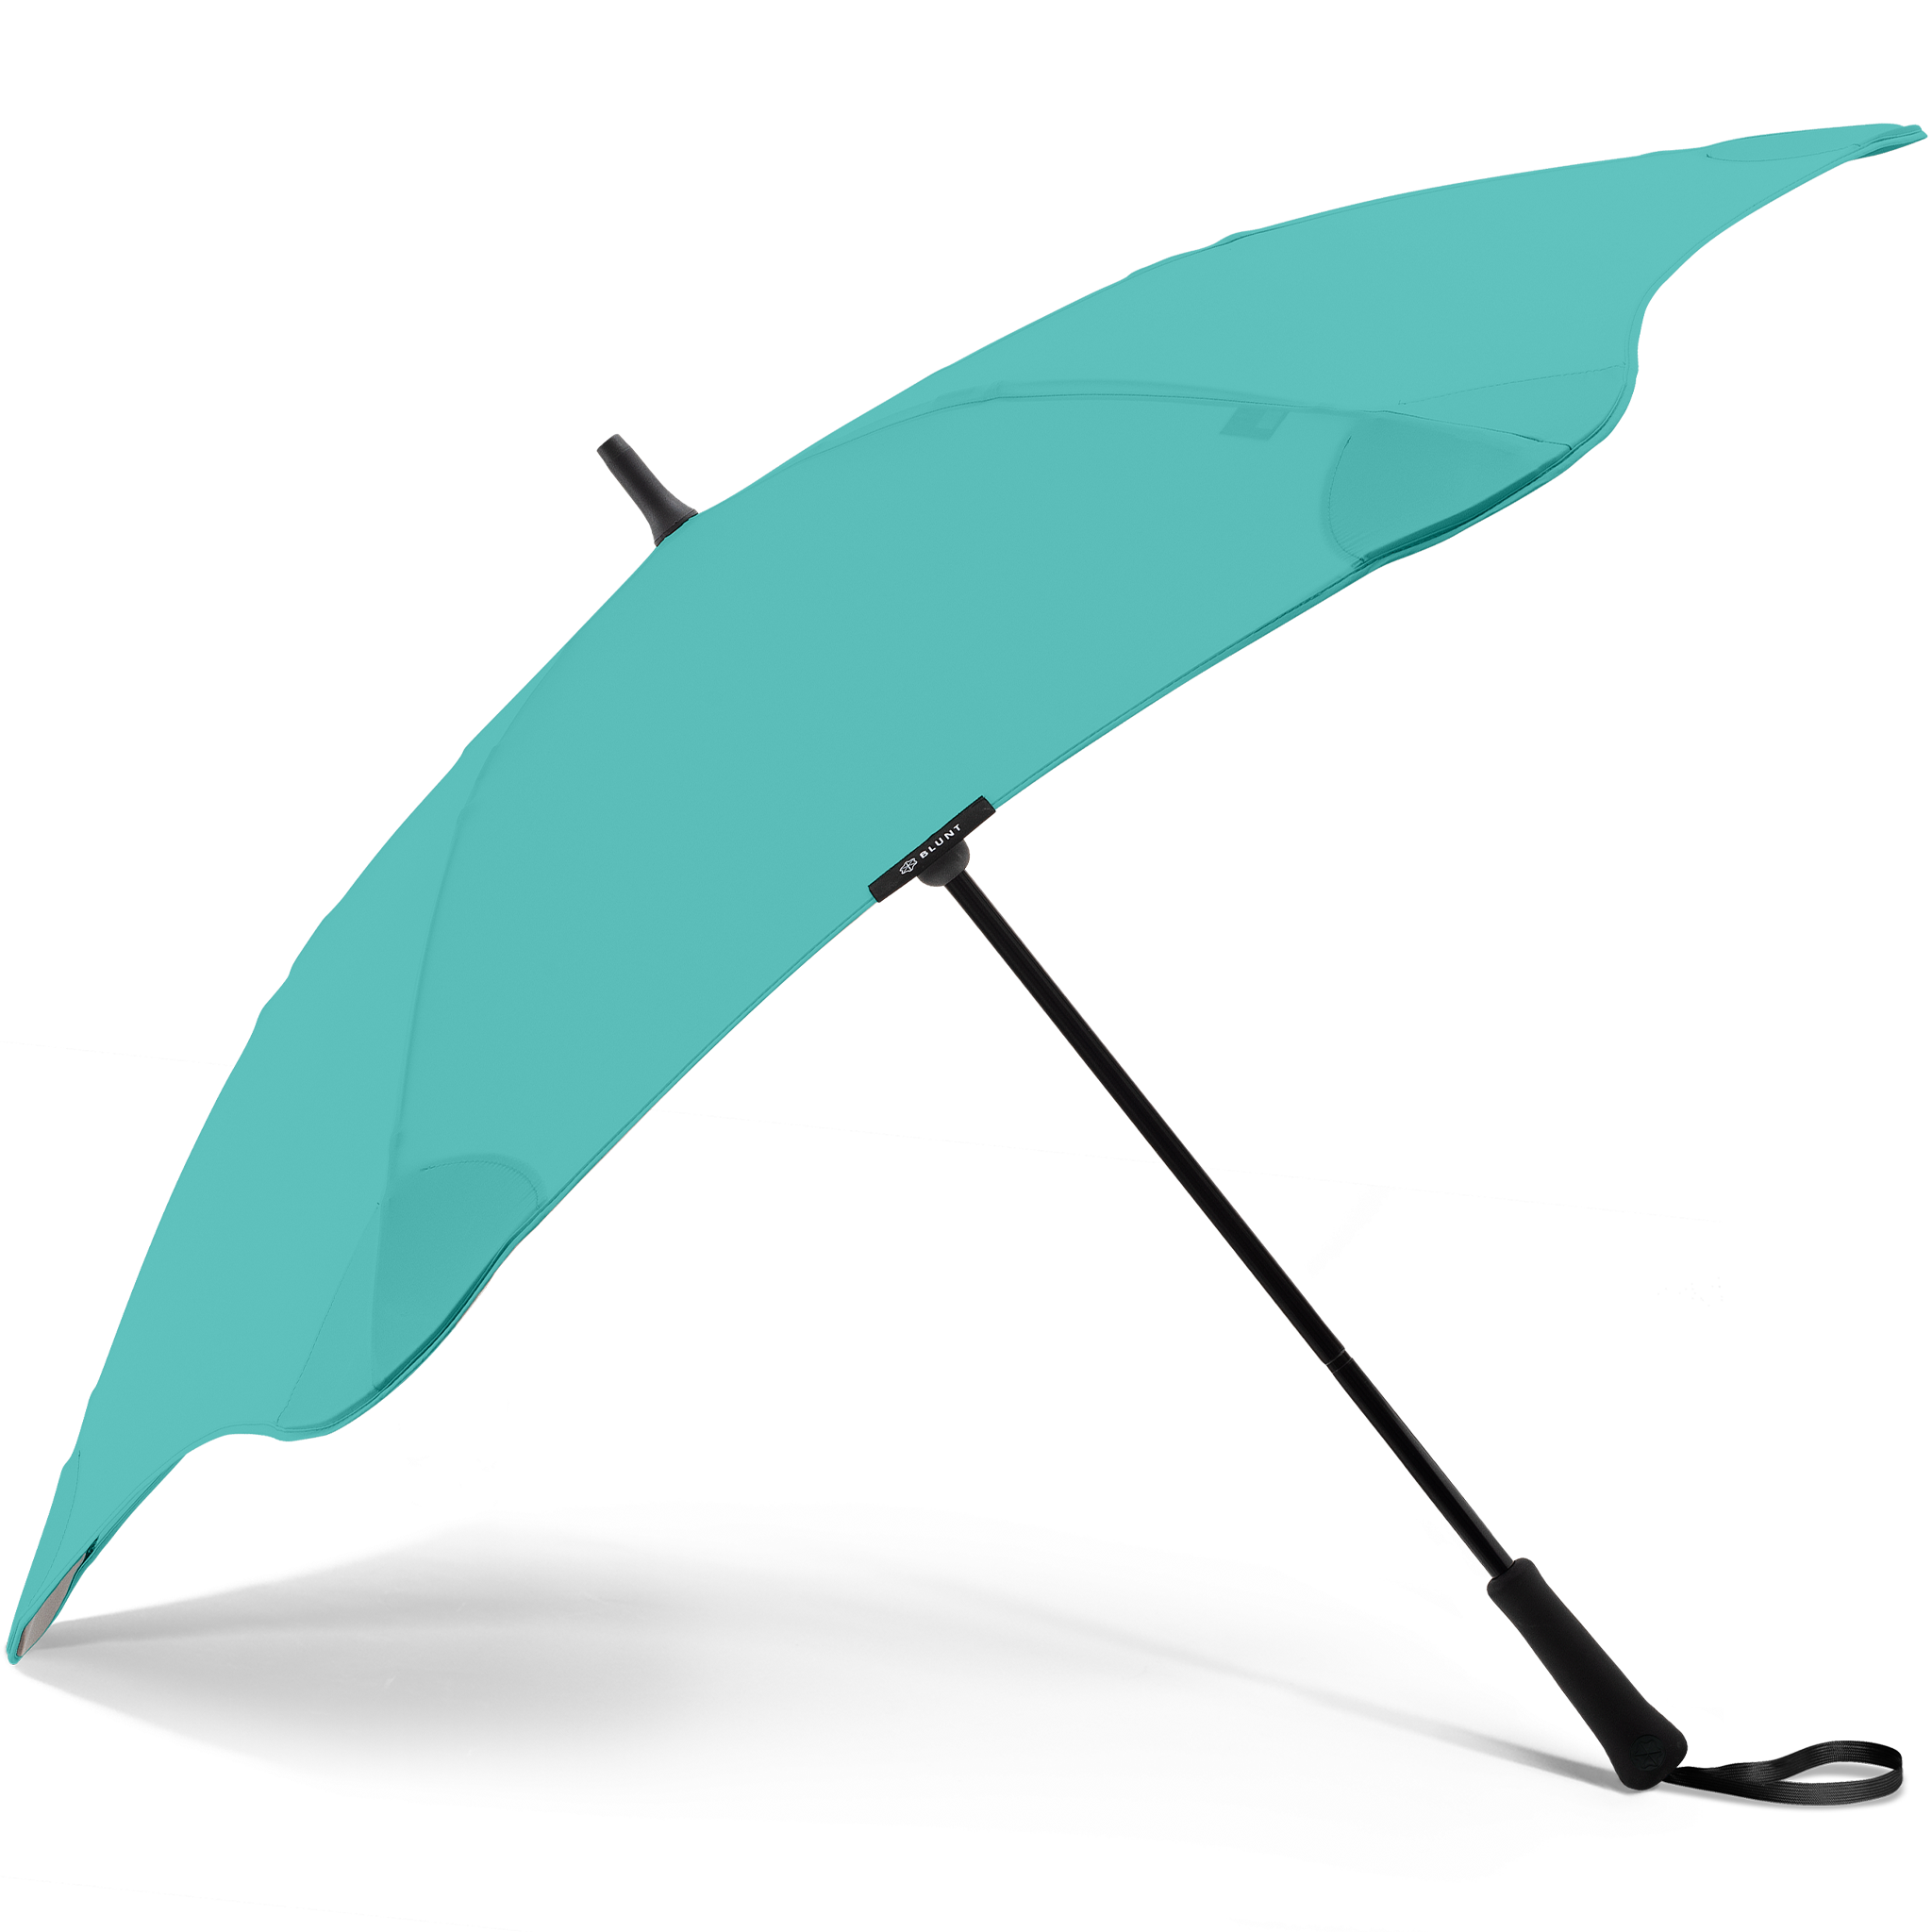 2020 Classic Mint Blunt Umbrella Side View